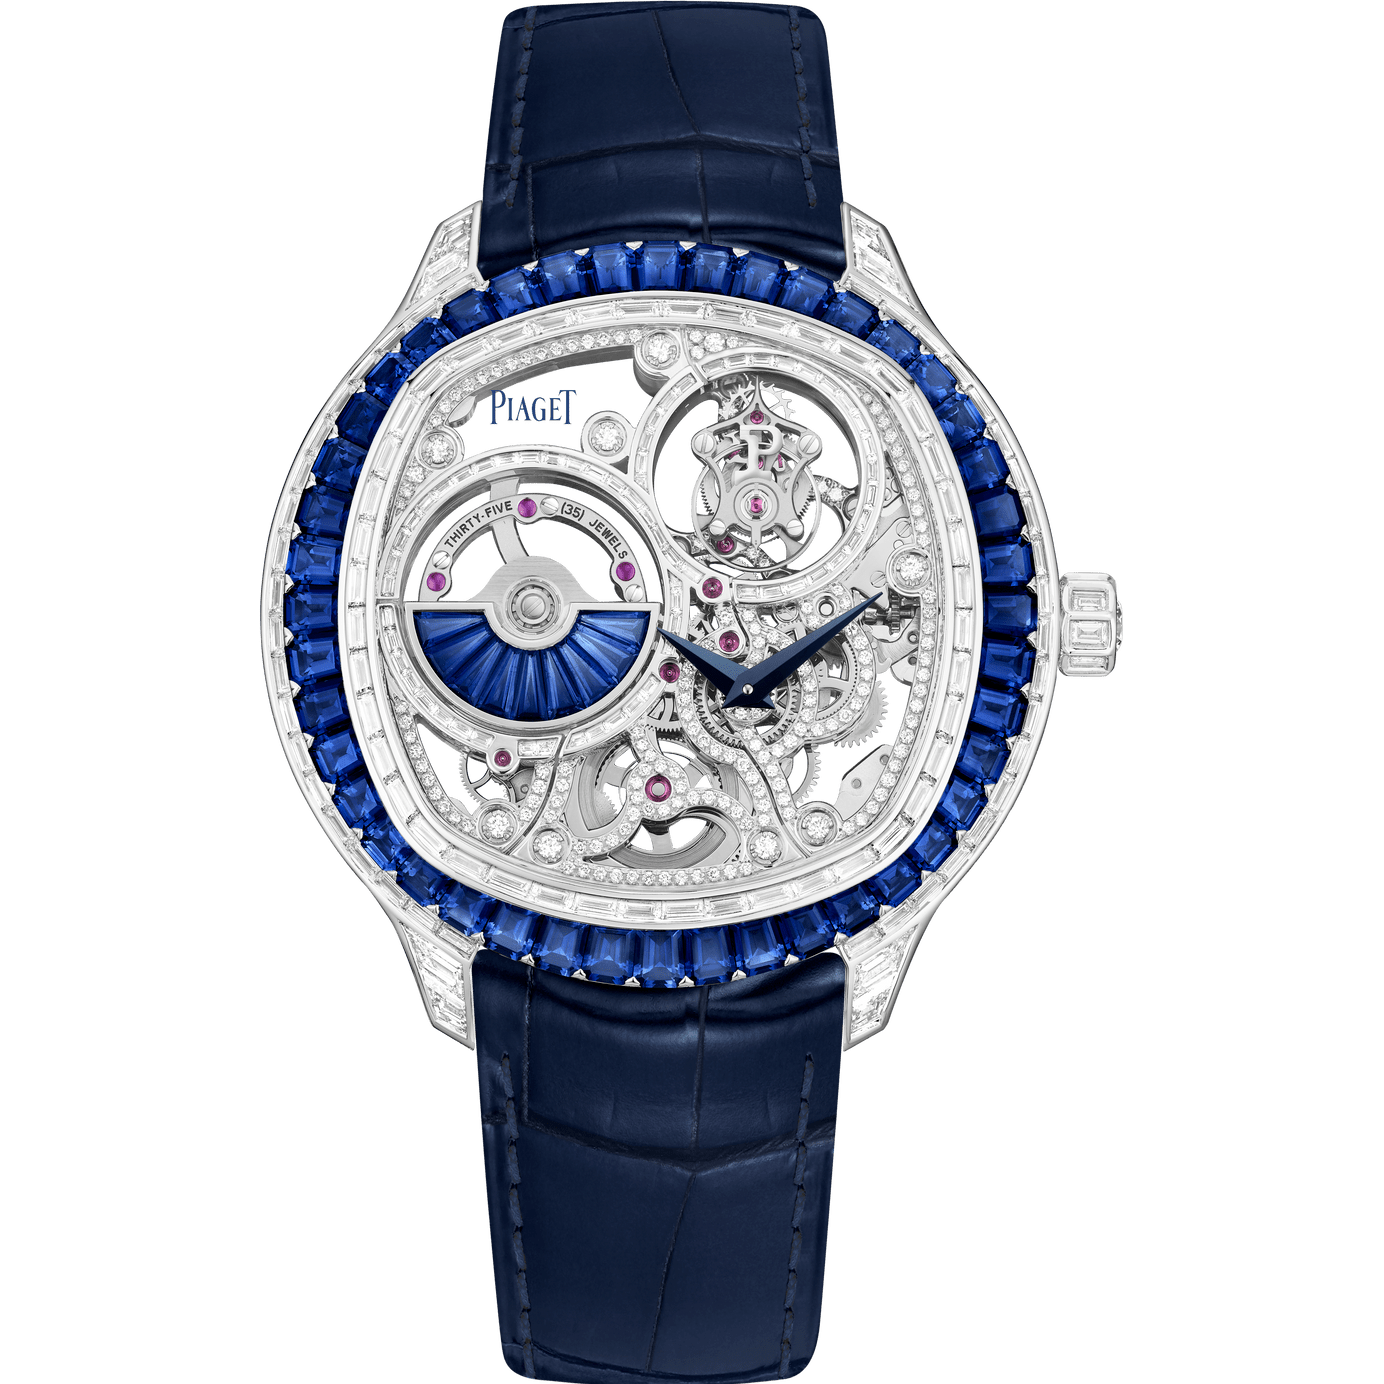 Piaget Polo Emperador Skeleton Tourbillon High Jewelry watch